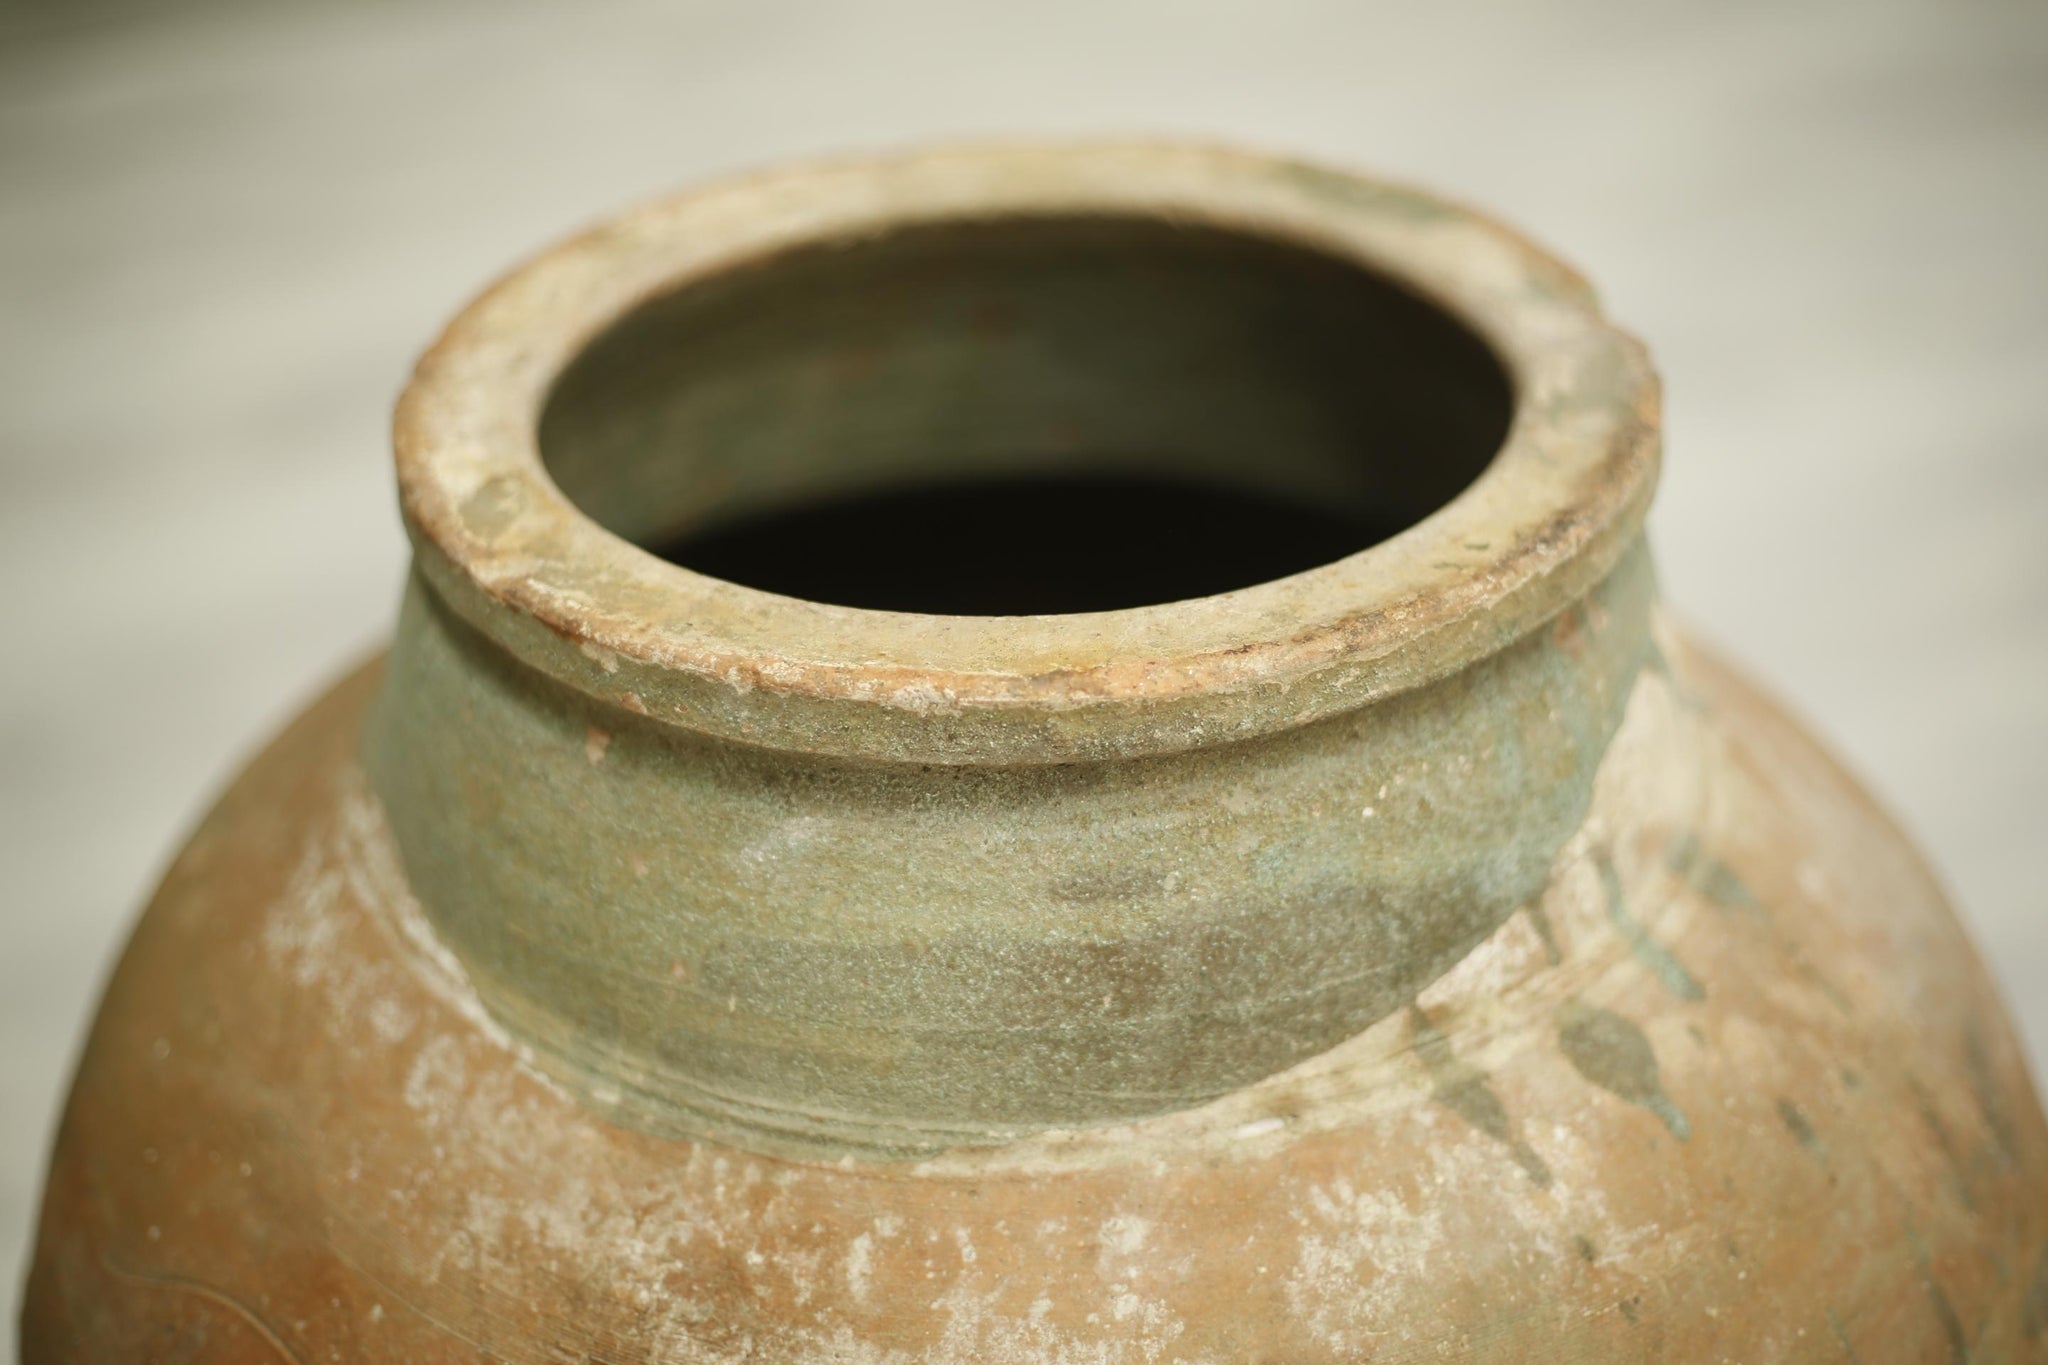 Early 20th century Turkish Olive pot No21 - TallBoy Interiors